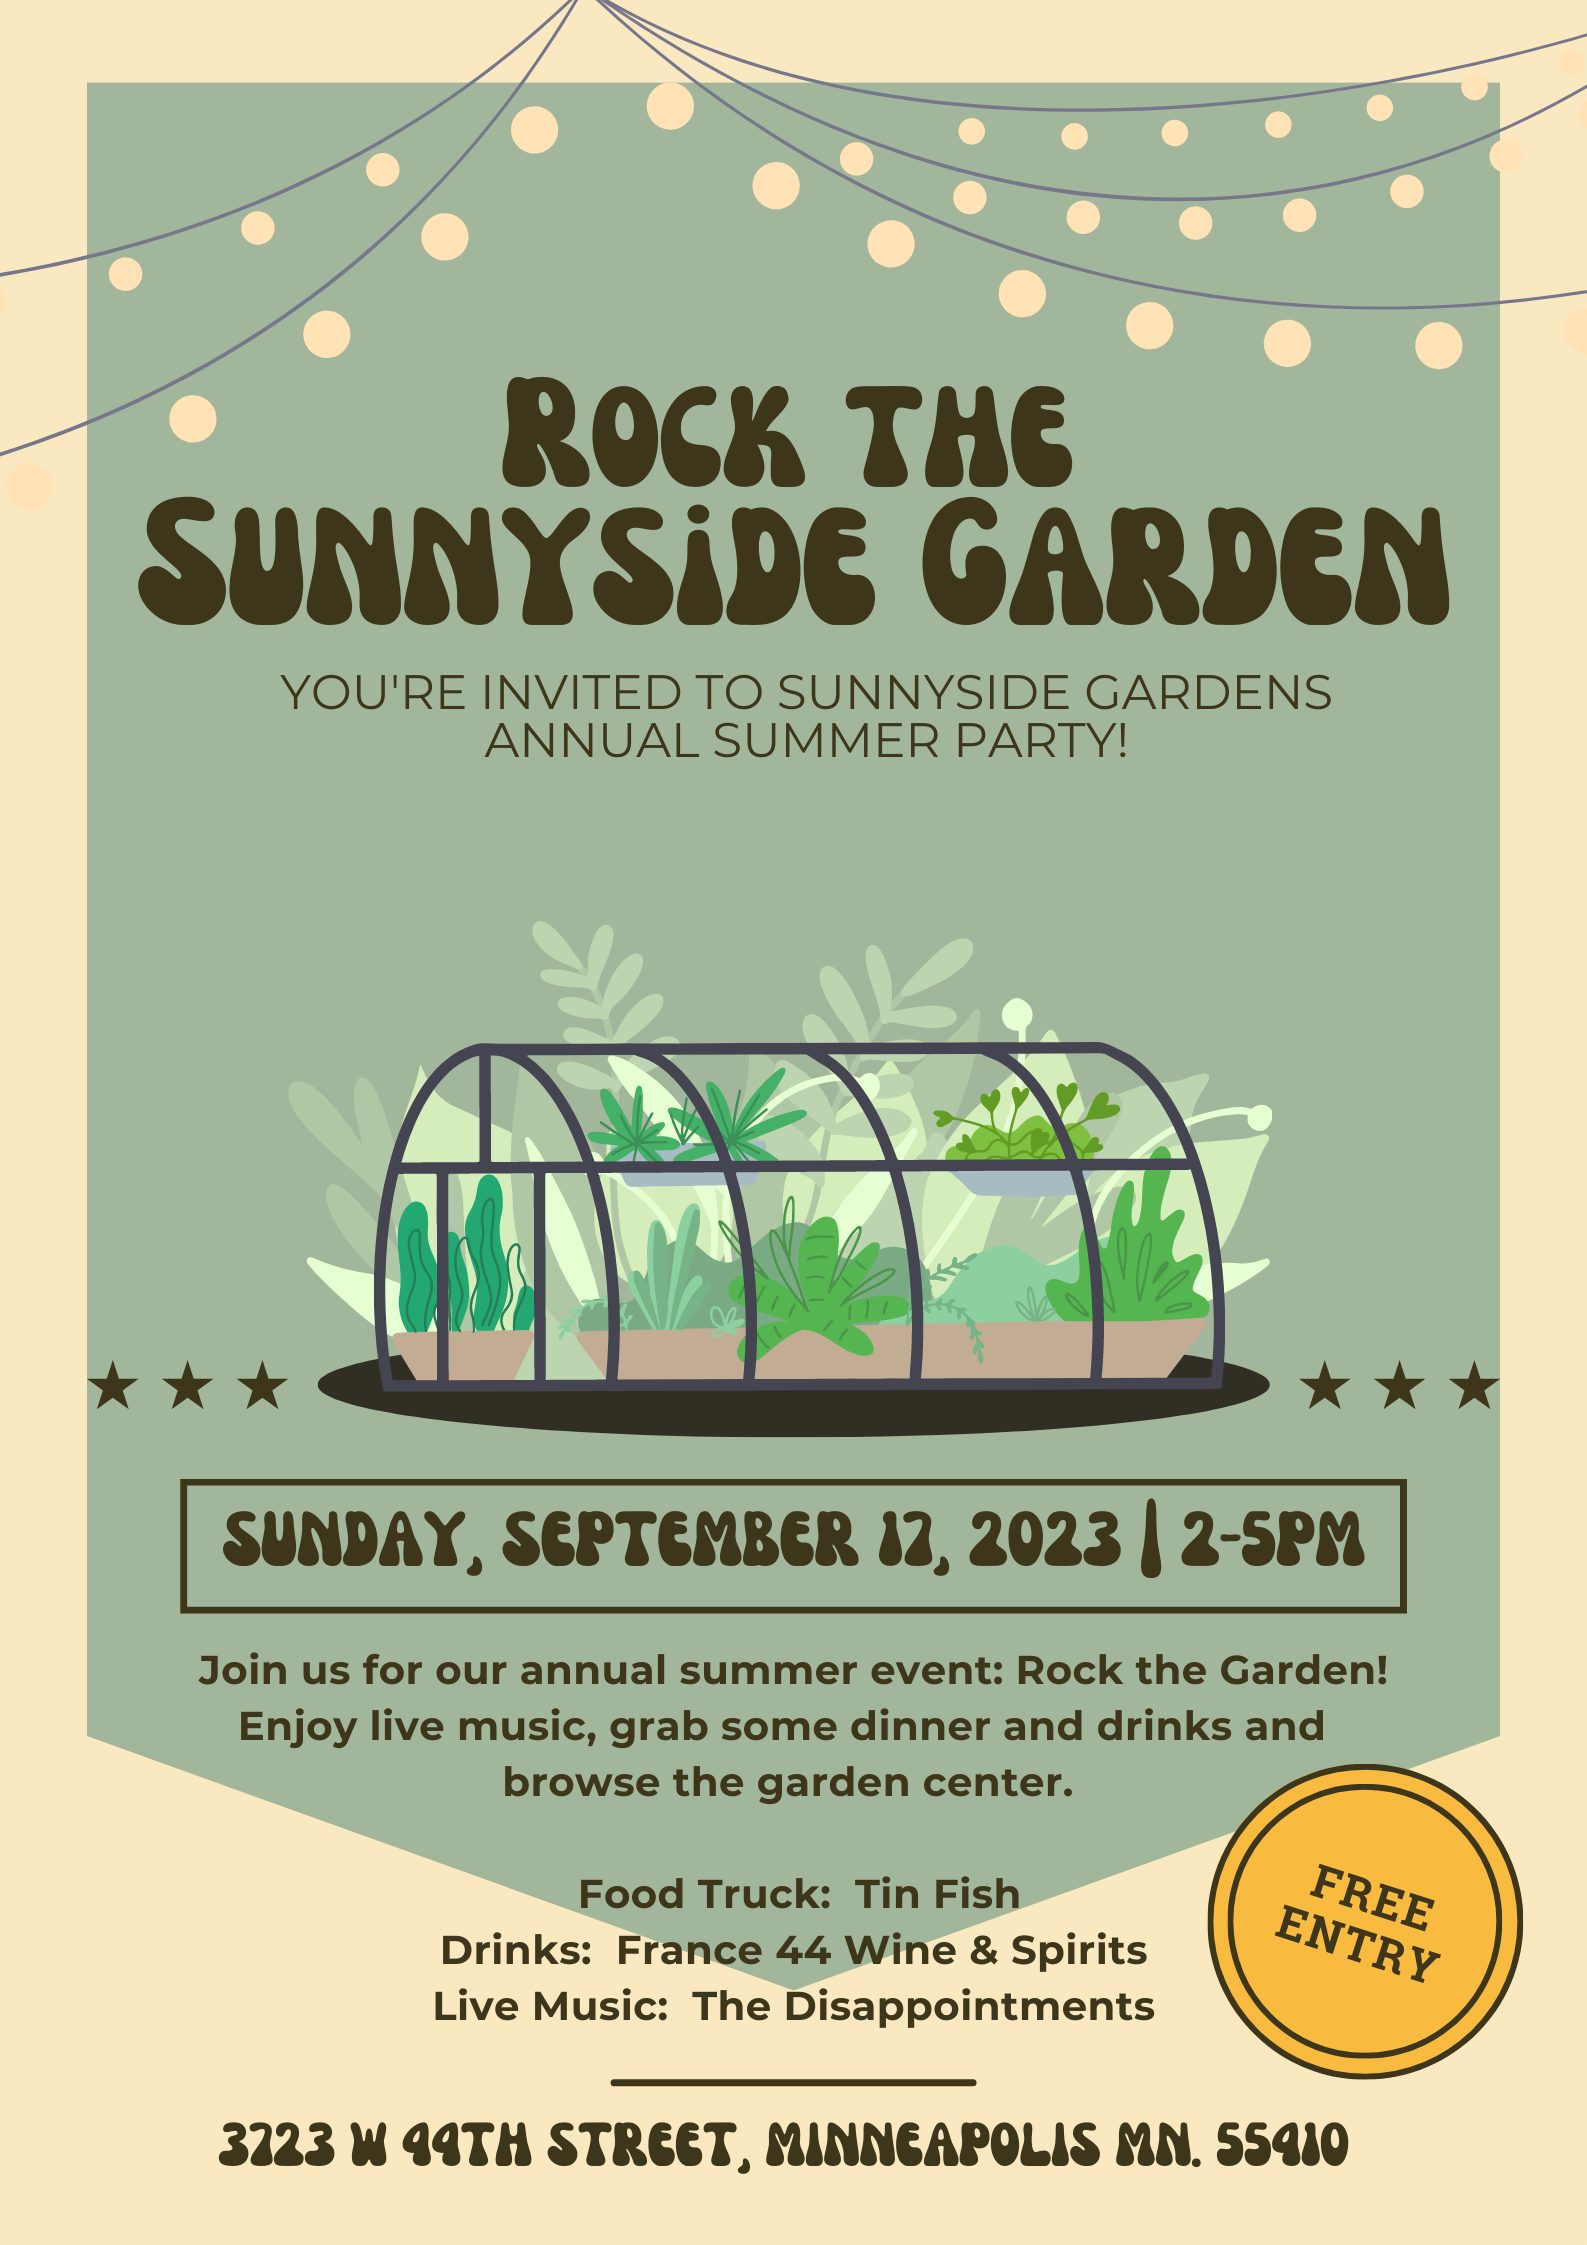 Rock the Sunnyside Gardens annual summer party 2023